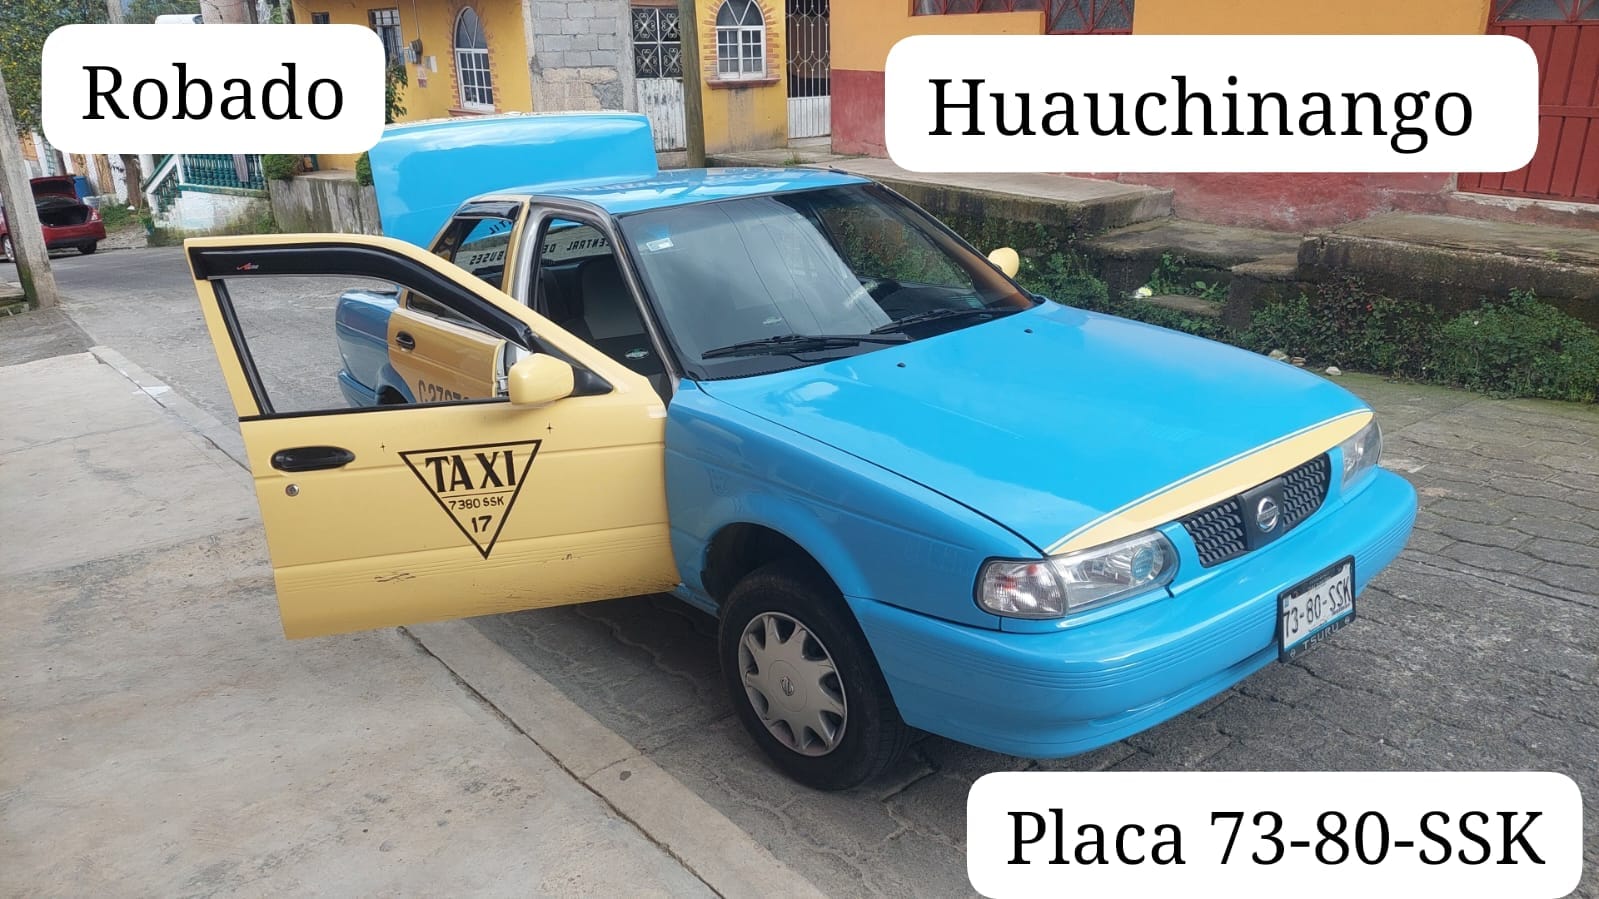 Se roban taxi en Huauchinango